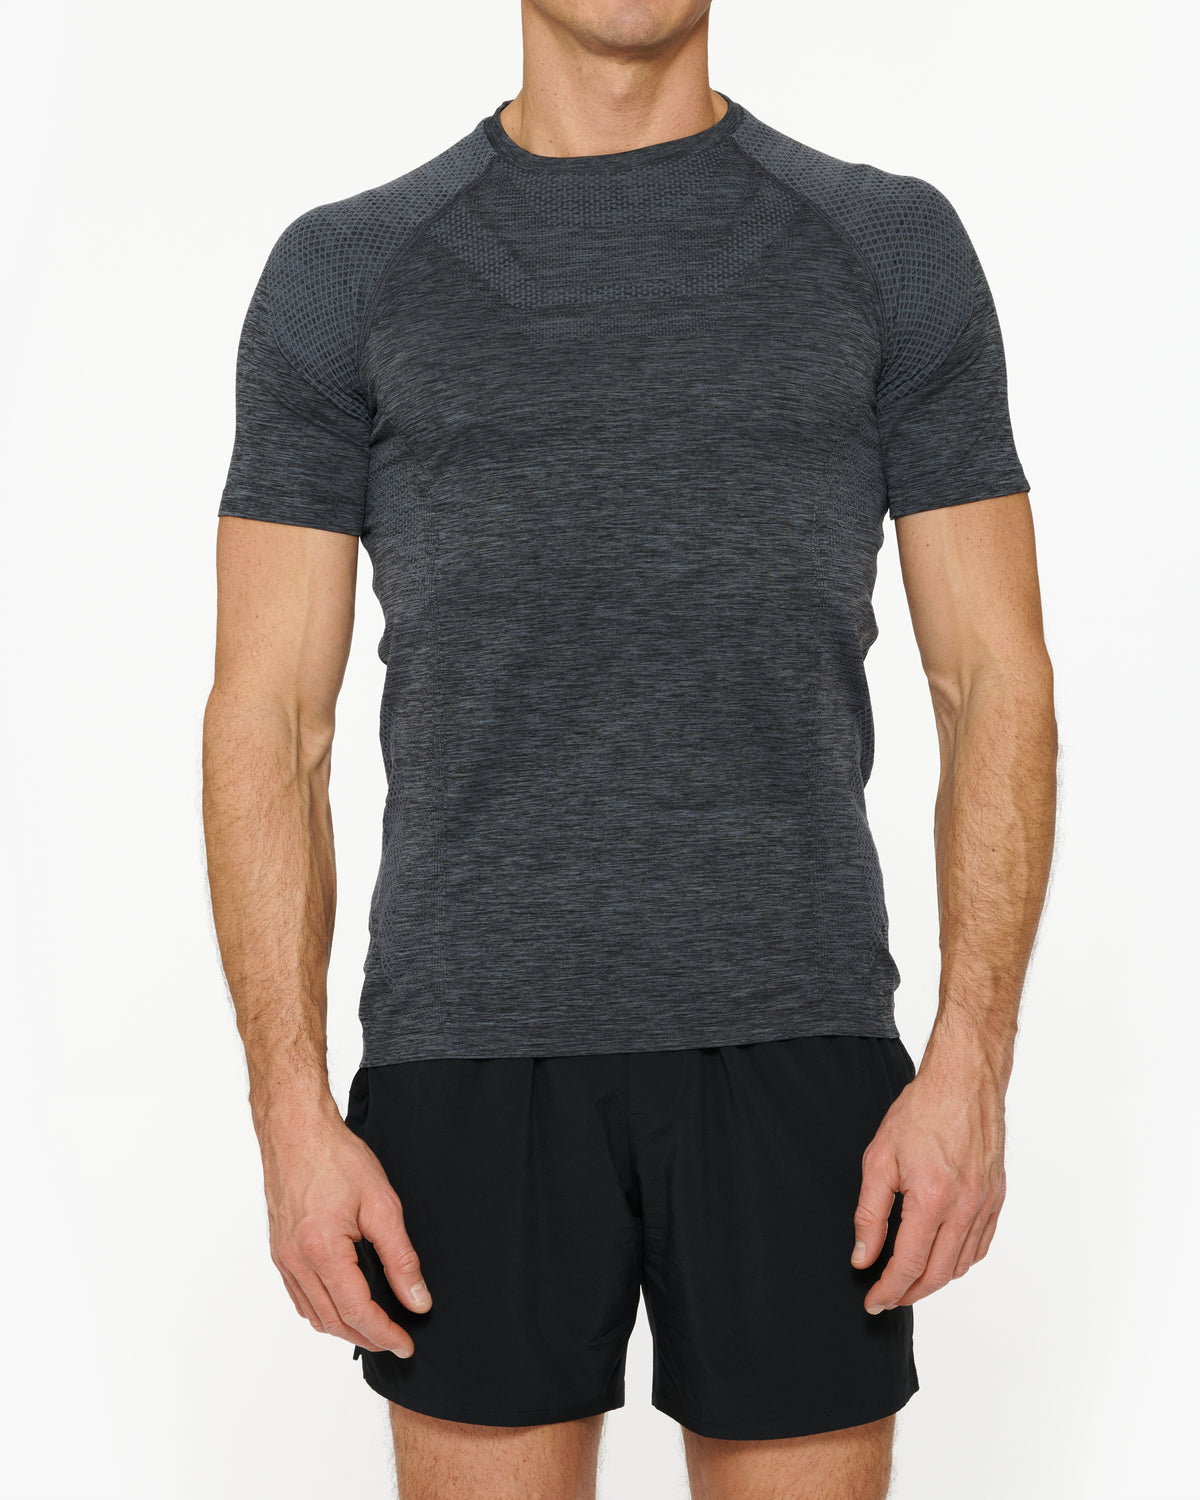 Alo Yoga Cool Fit Short Sleeve Workout Shirt Size Large